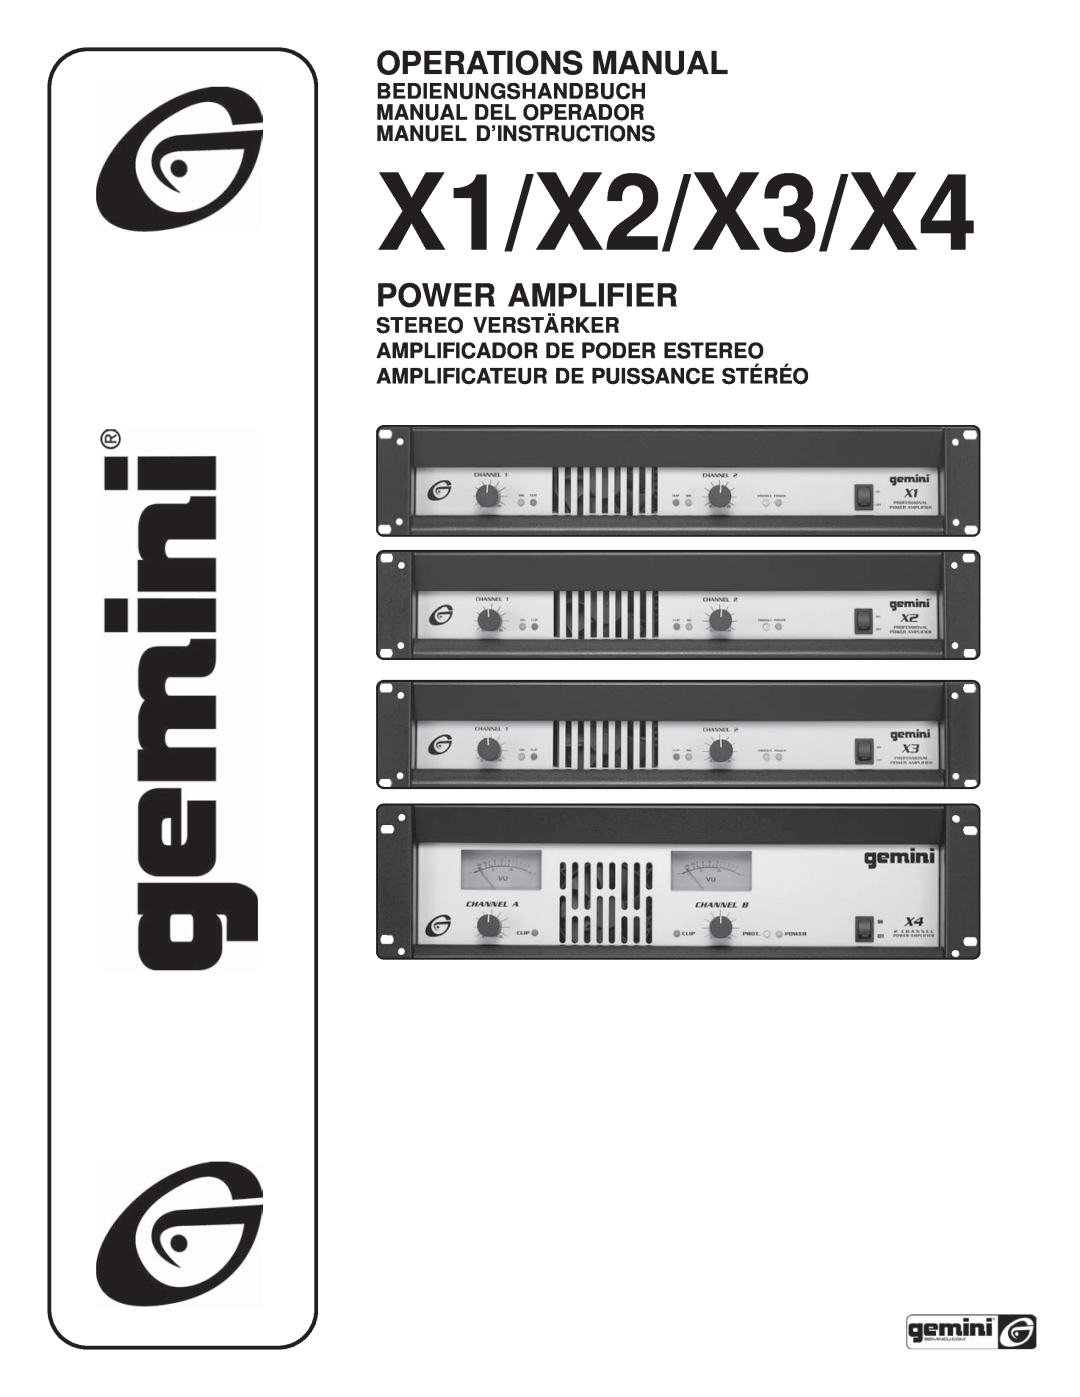 Gemini X4, X3, X2 manual Bedienungshandbuch Manual Del Operador, Manuel D’Instructions, Amplificateur De Puissance Stéréo 